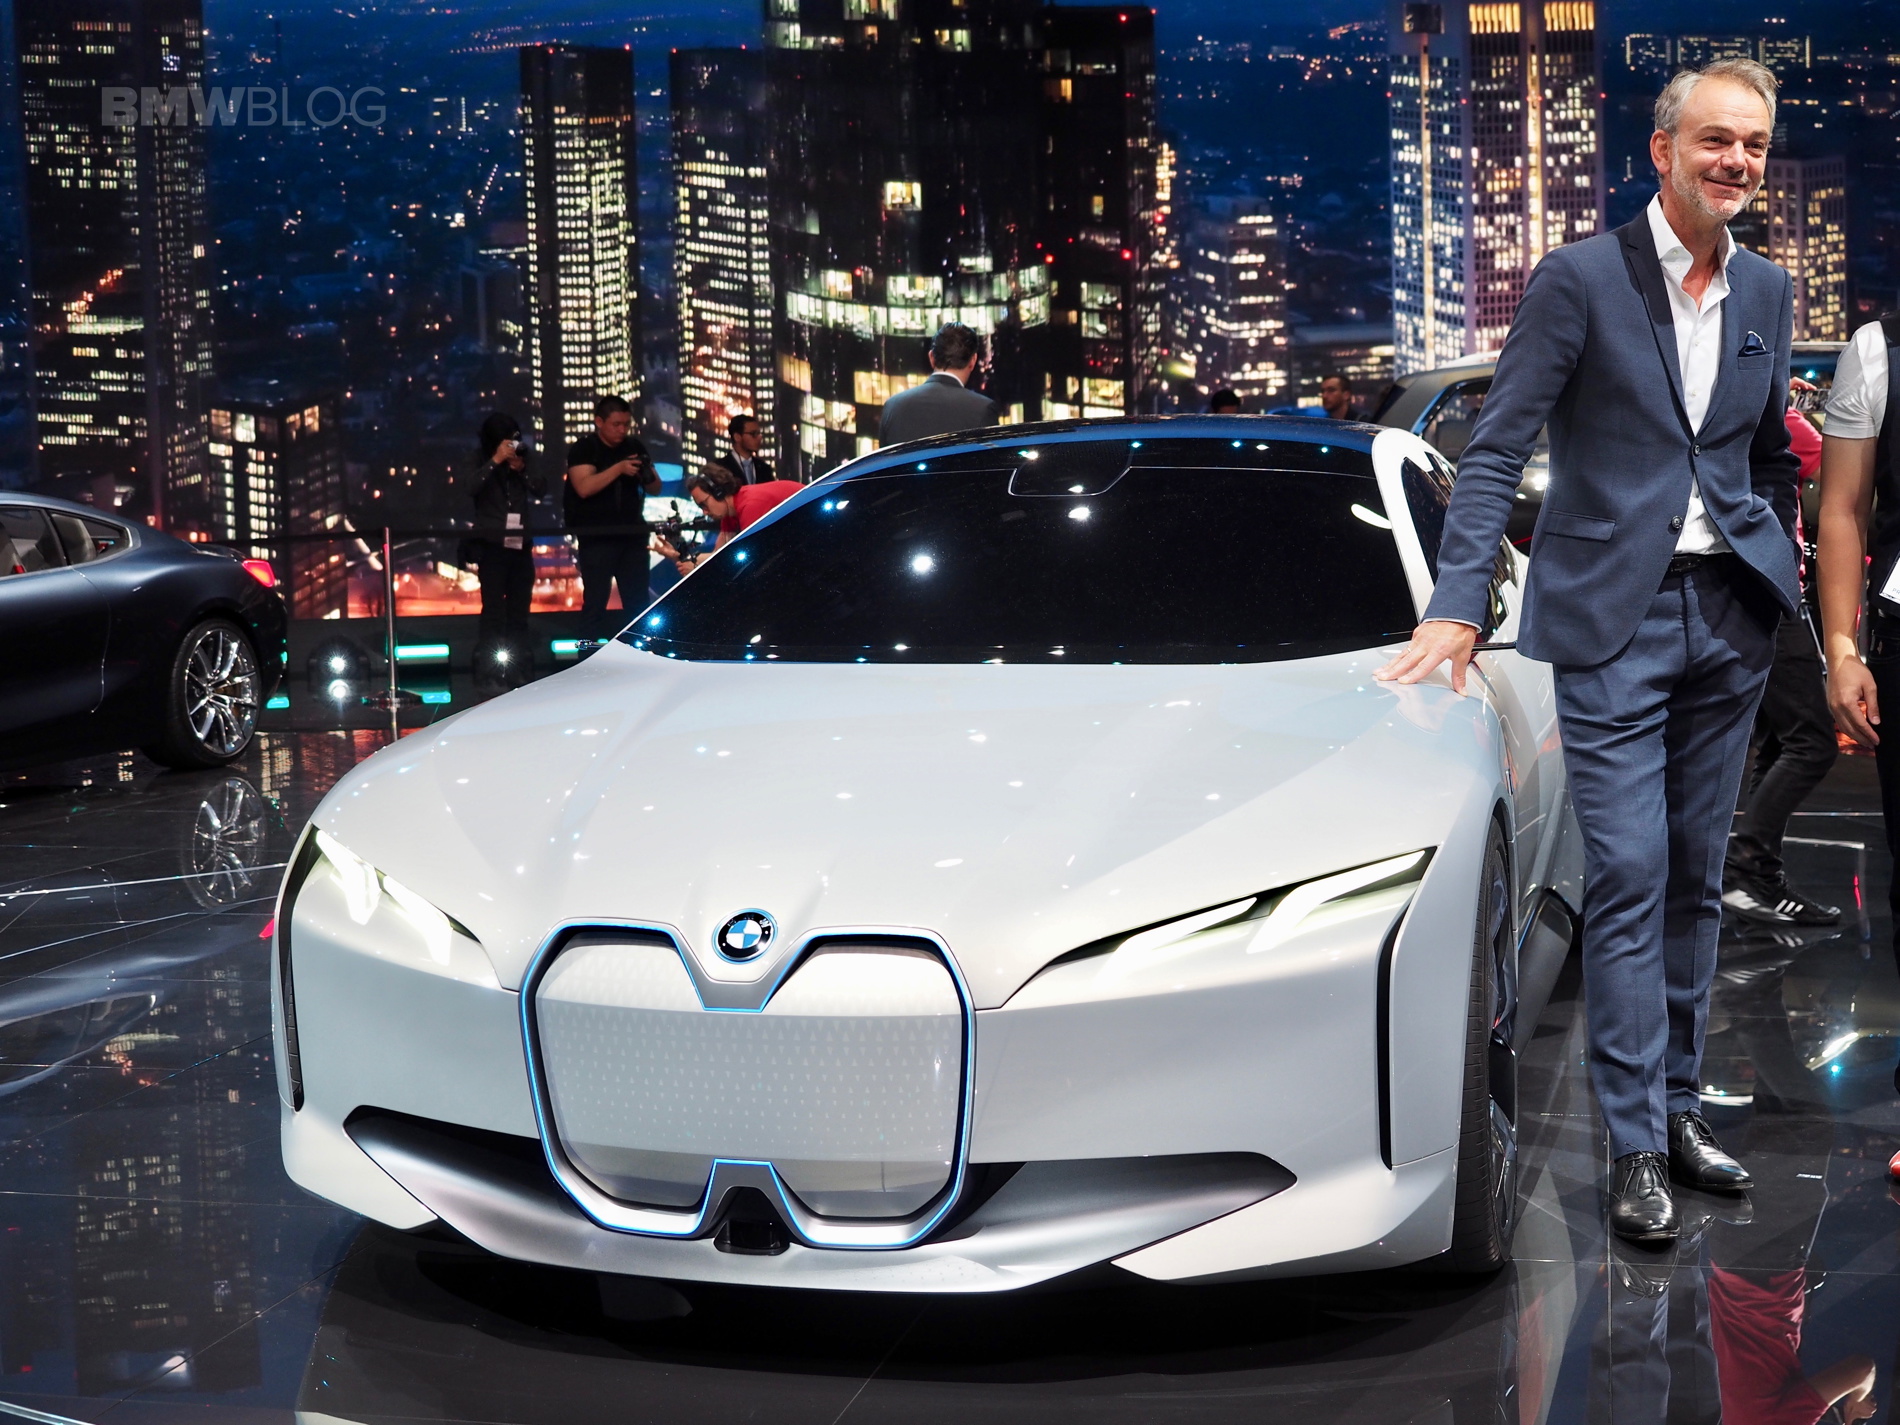 Продажа машины 2023 год. BMW i1000000. BMW i4 2023. BMW Concert i4. BMW i4 Vision Dynamics салон.